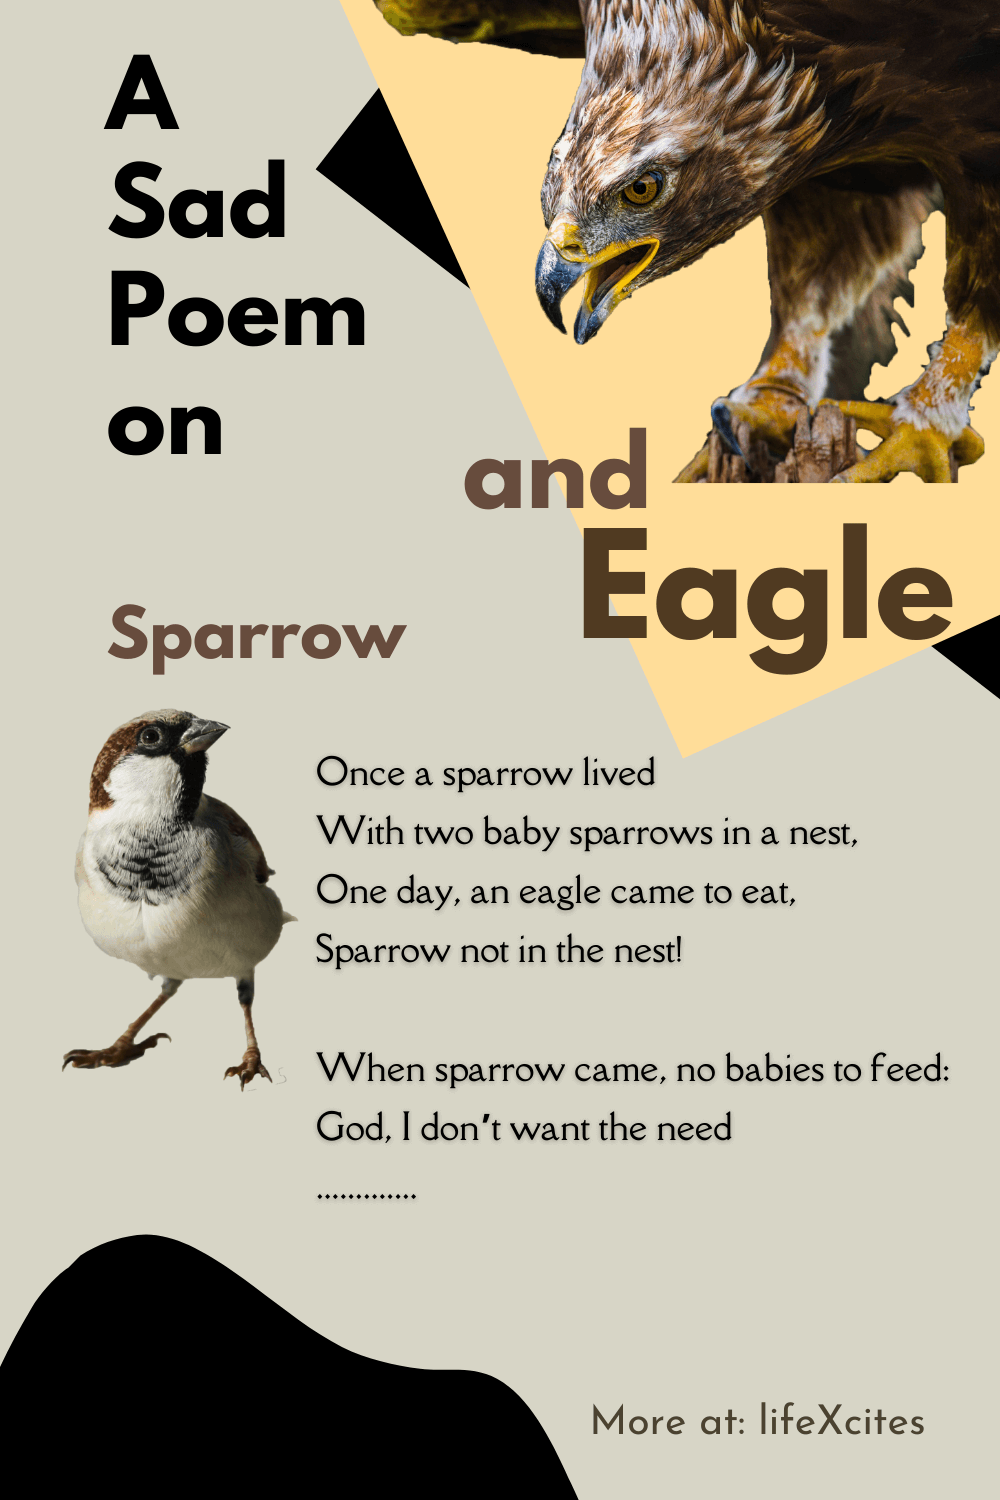 A Sad Poem on Sparrow and Eagle